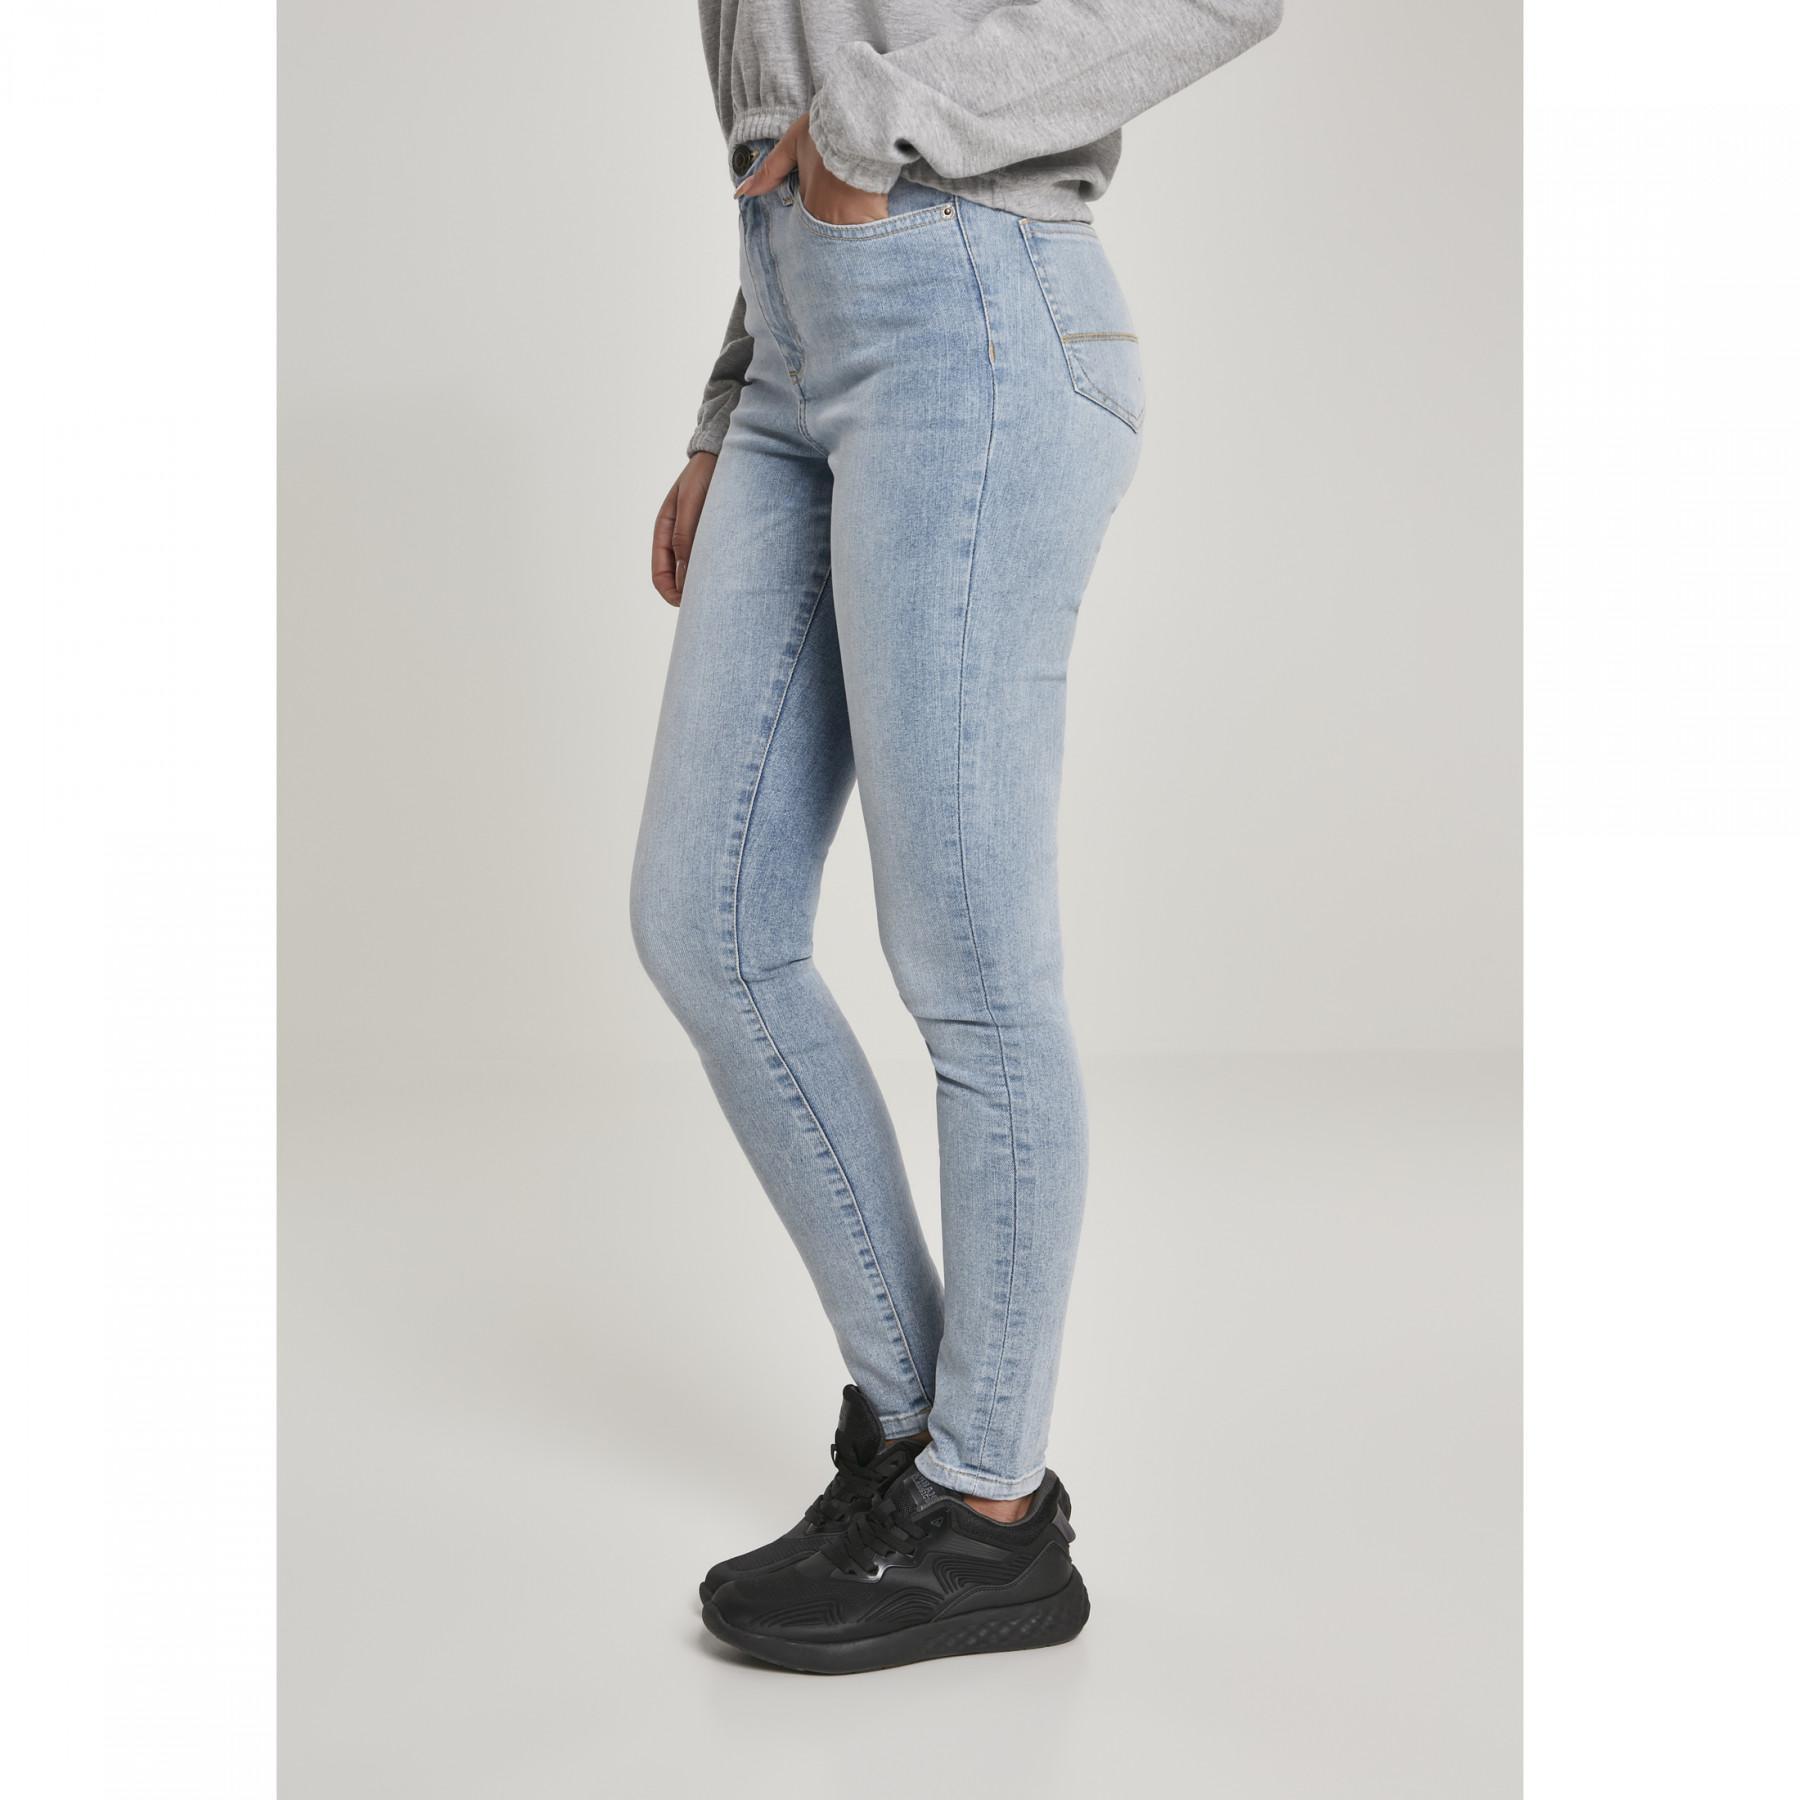 Pantalon jeans femme Urban Classics high waist skinny